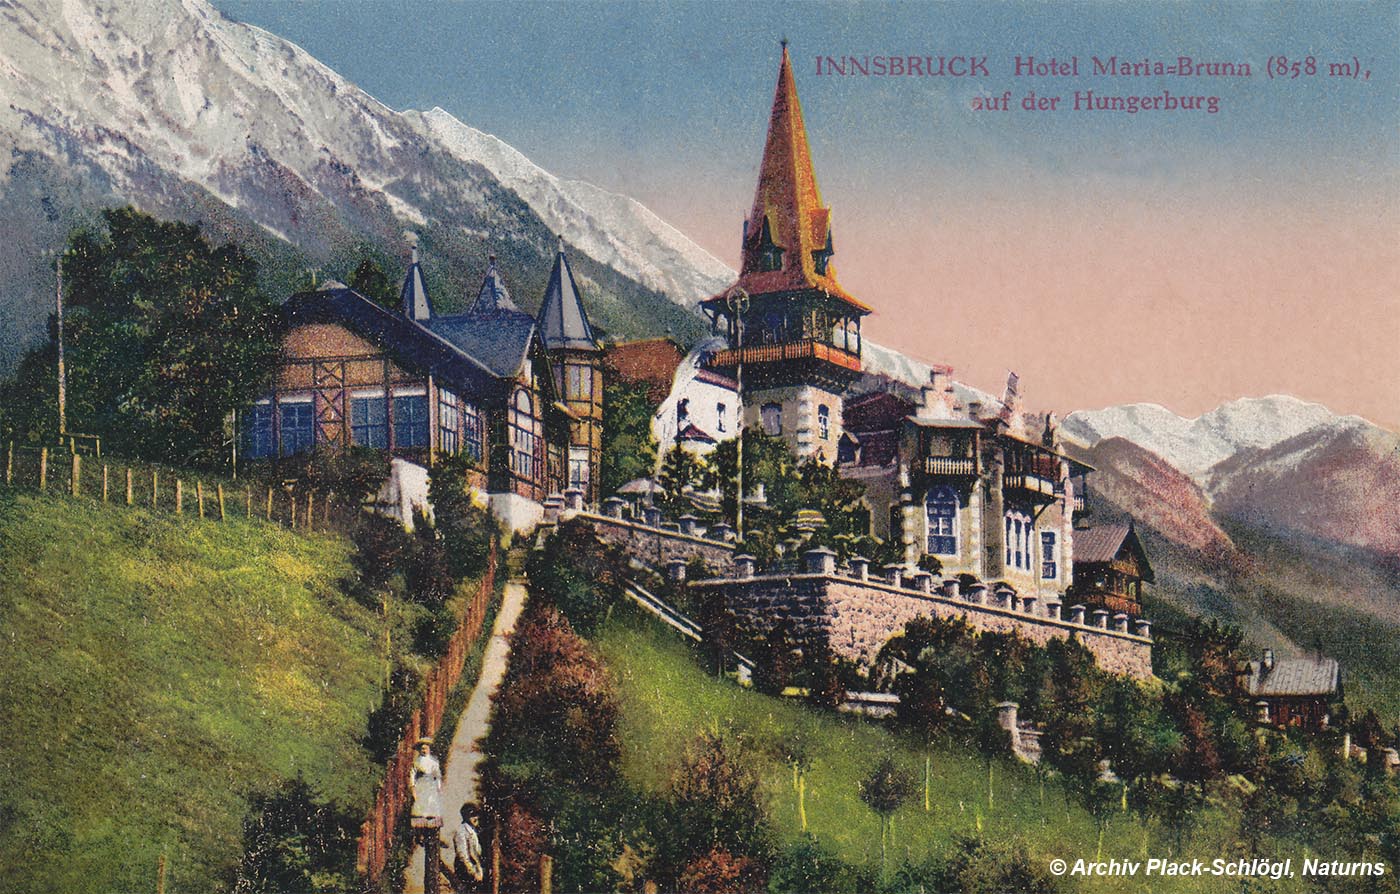 Innsbruck Hotel Maria-Brunn